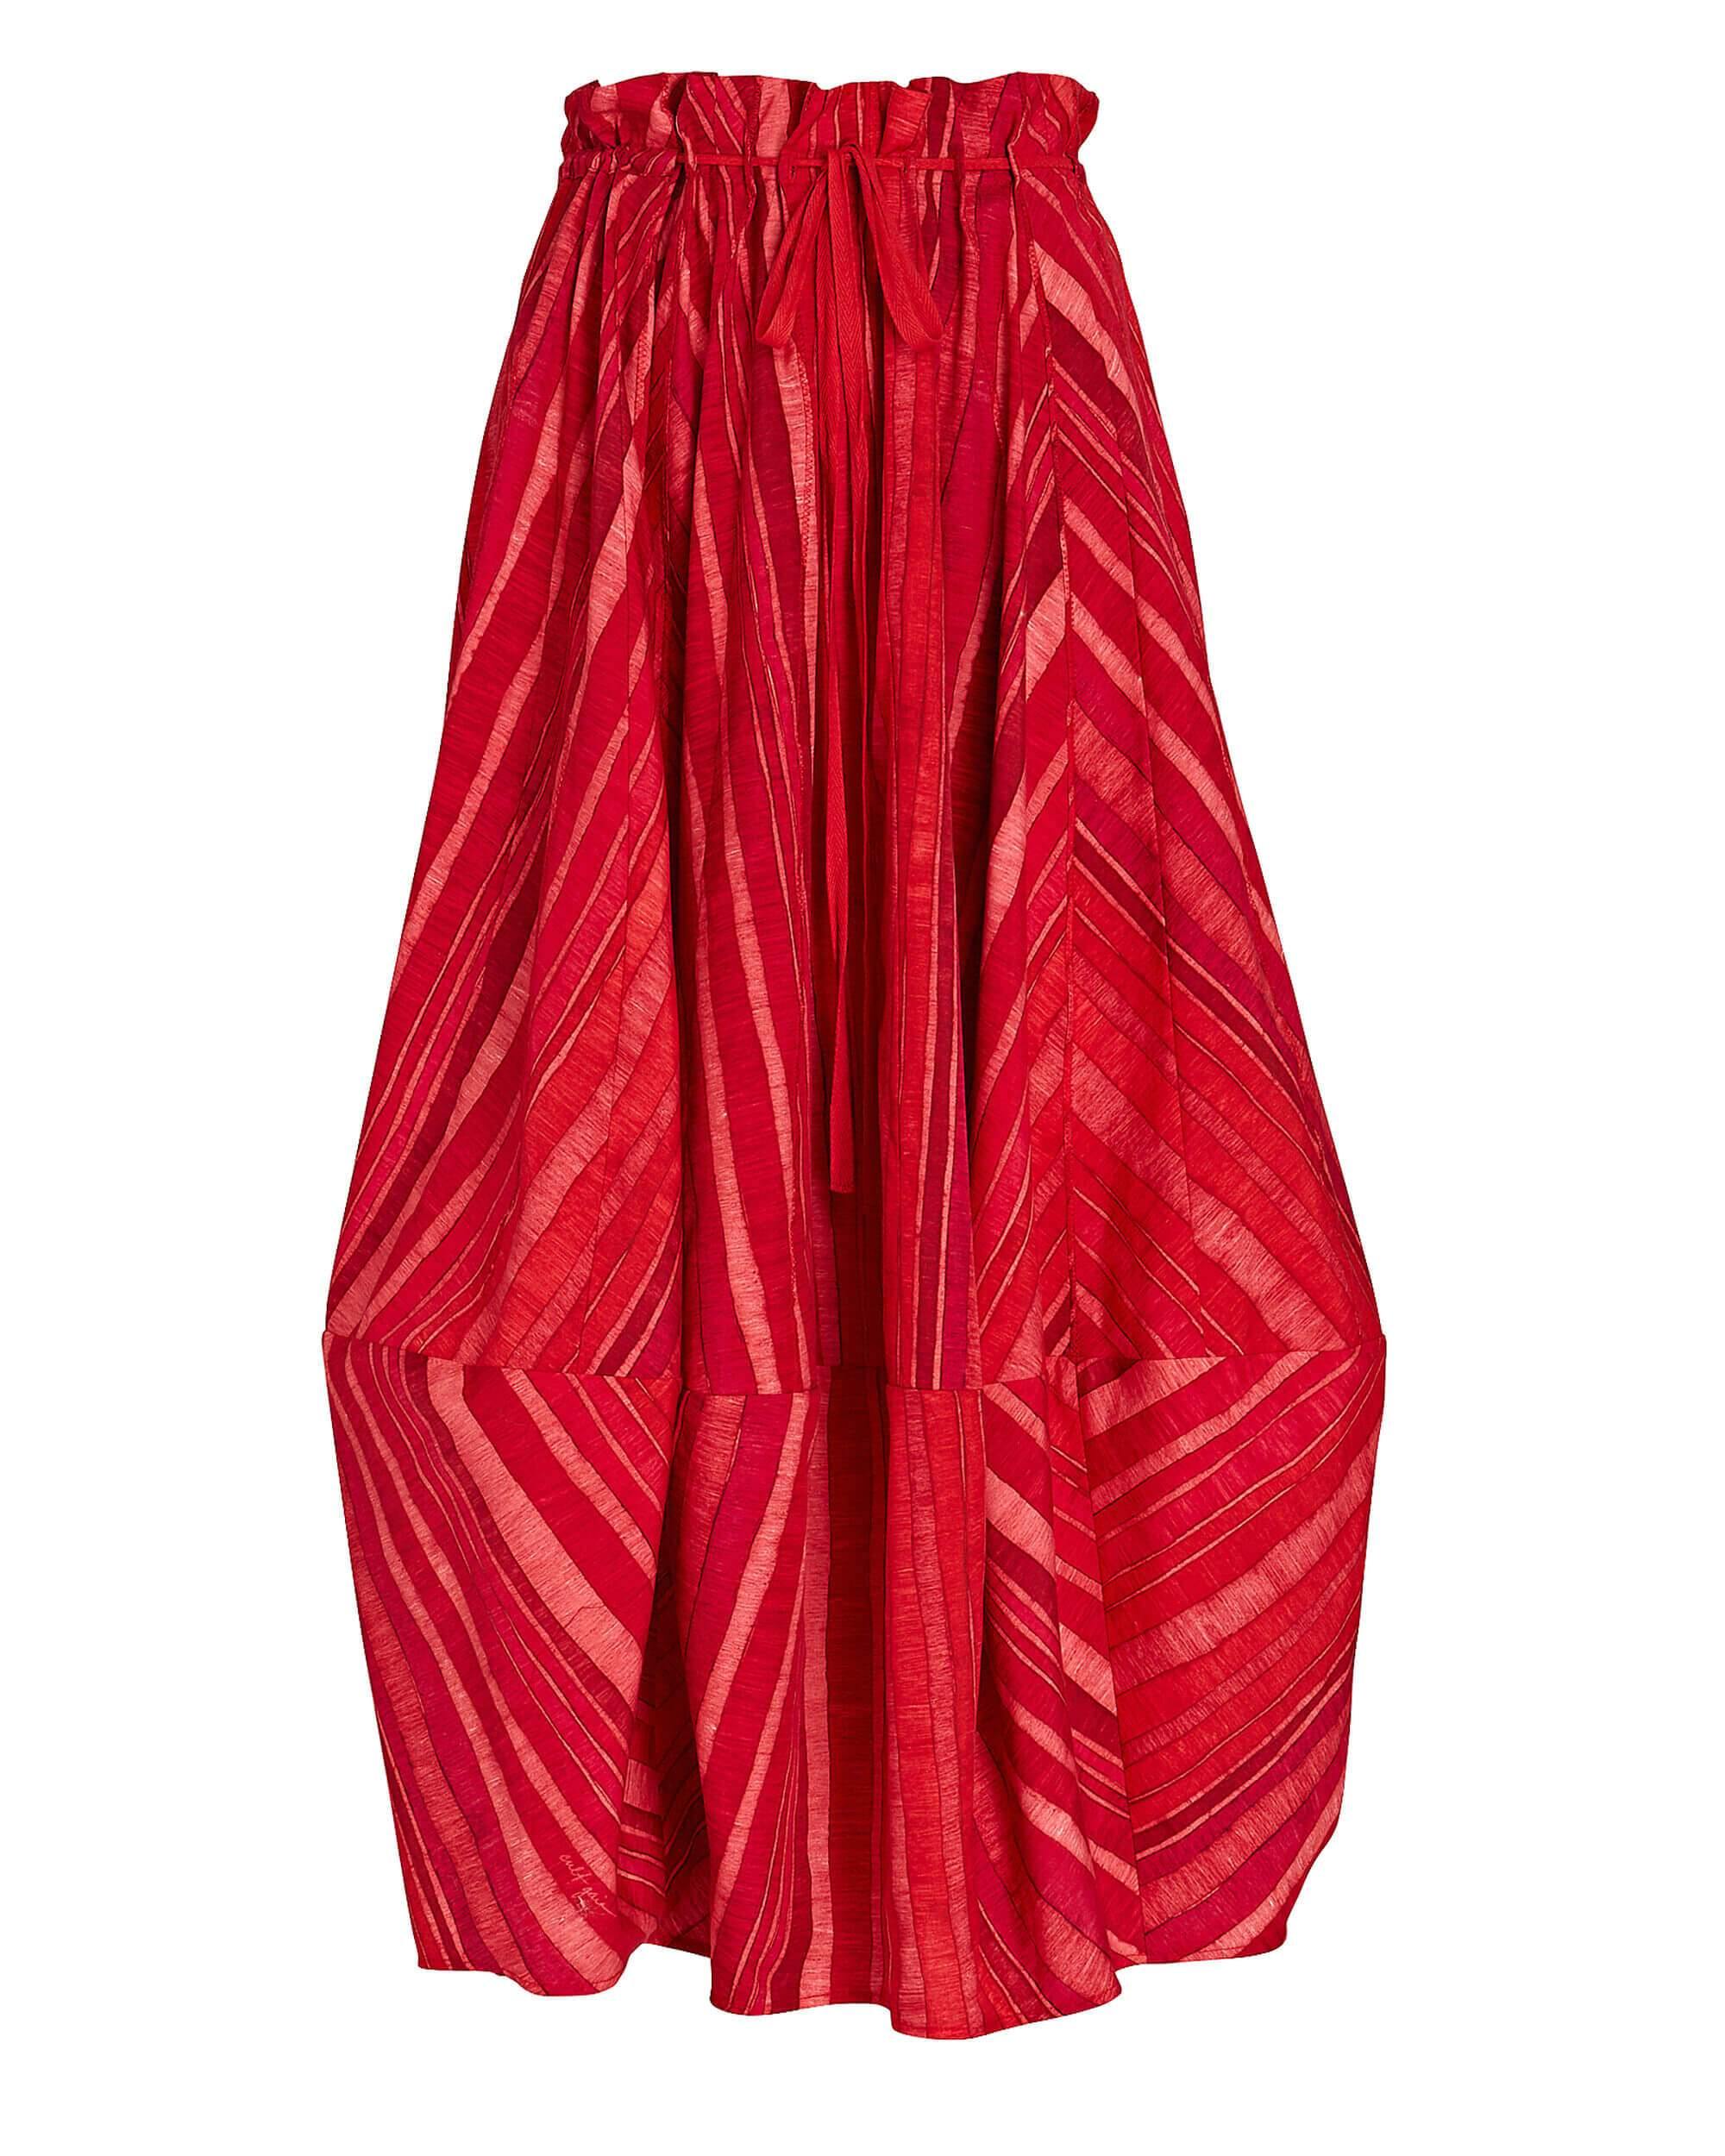 CULT GAIA Oshun Cotton-Silk Skirt in Red Clay Multi | CLOSET Singapore